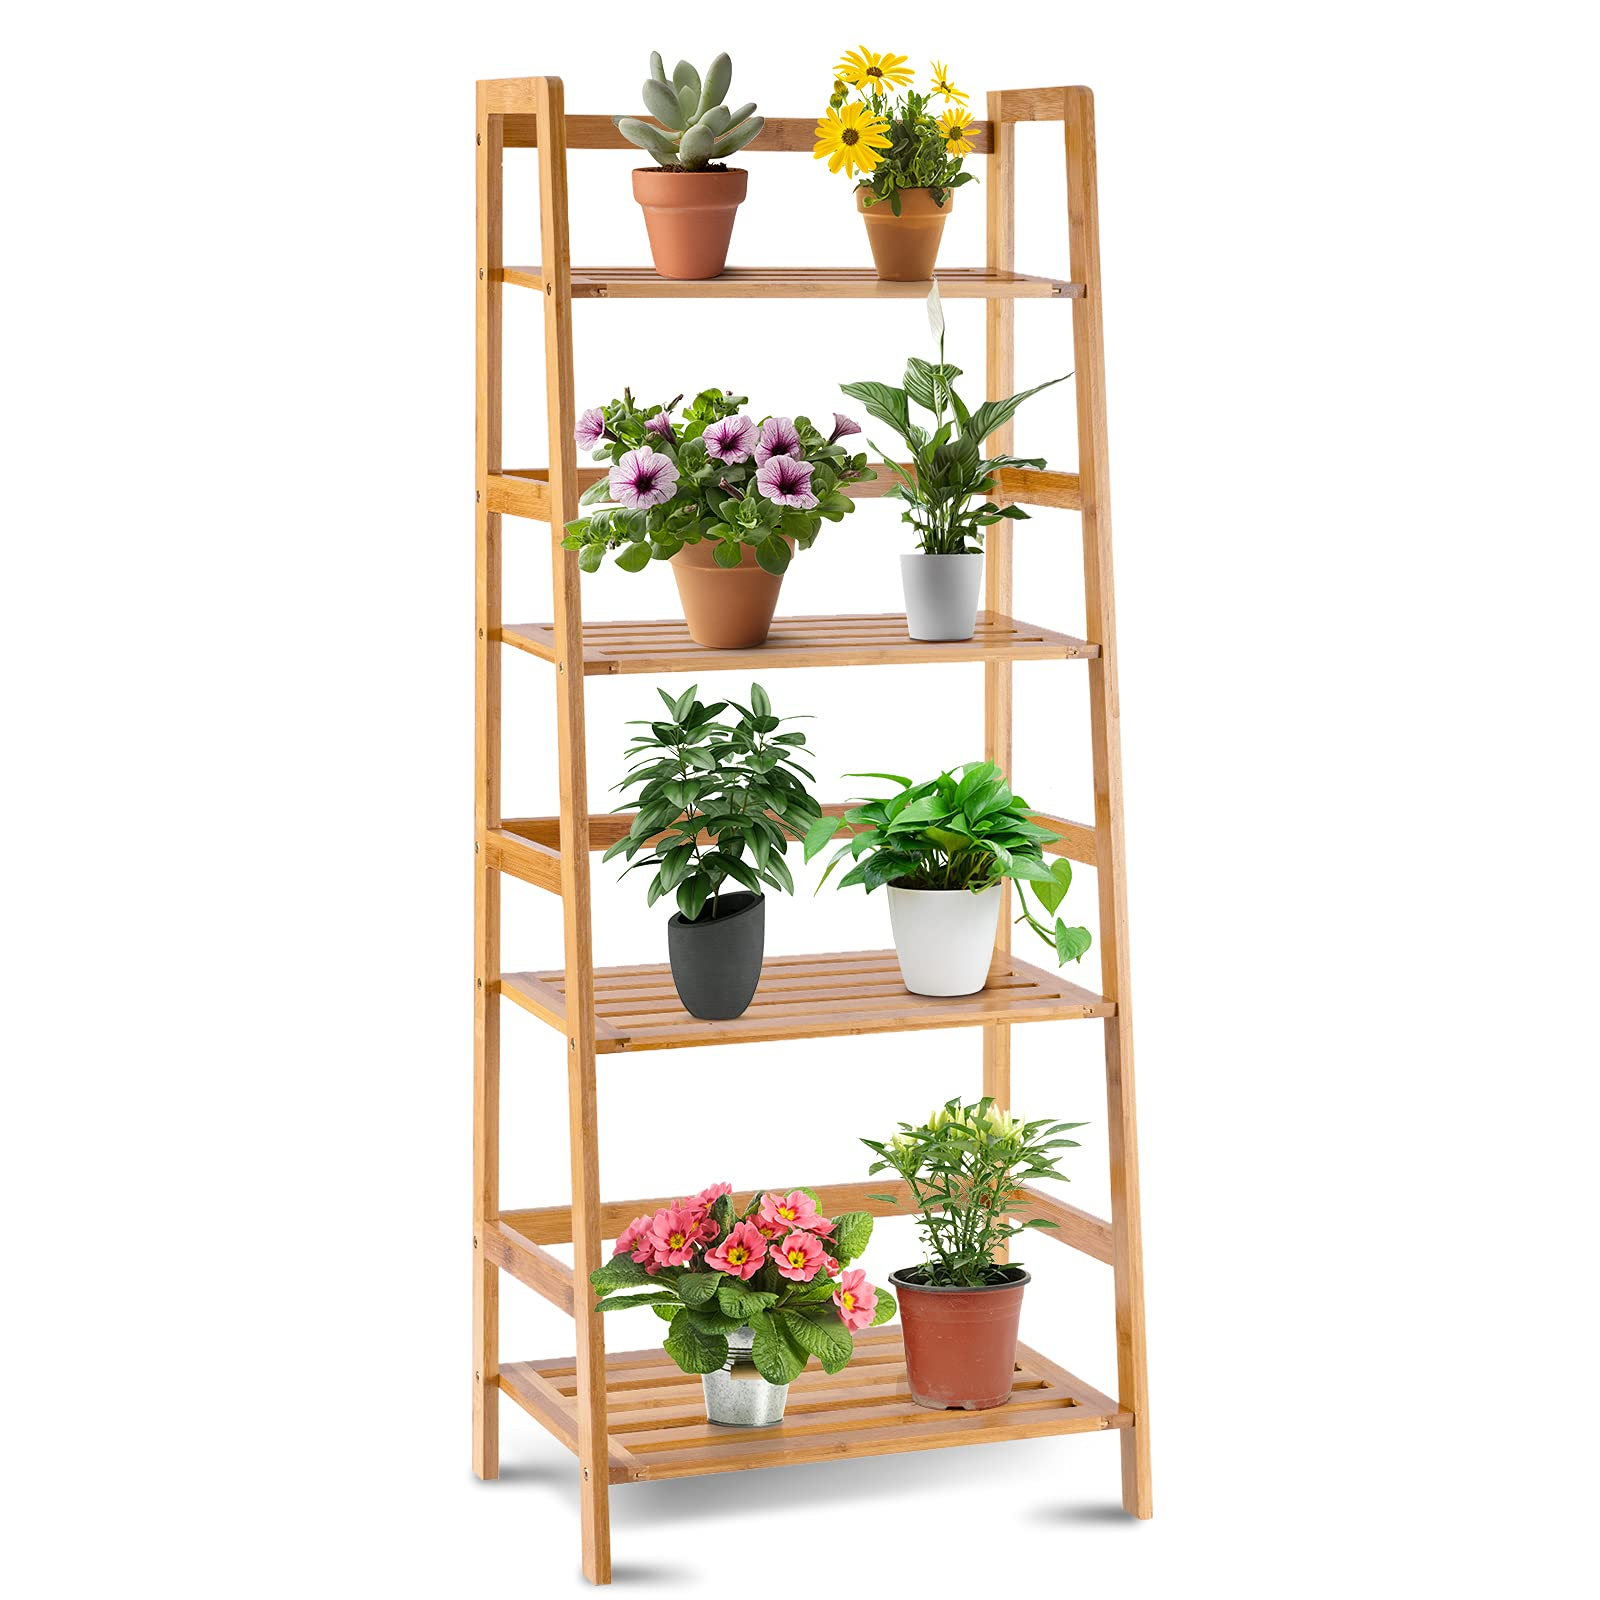 Giantex 4-Tier Bamboo Plant Stand Flower Pots Holder Display Shelf, 47.5inch Ladder Shelf Plants Organizer Rack for Patio Balcony Garden Home